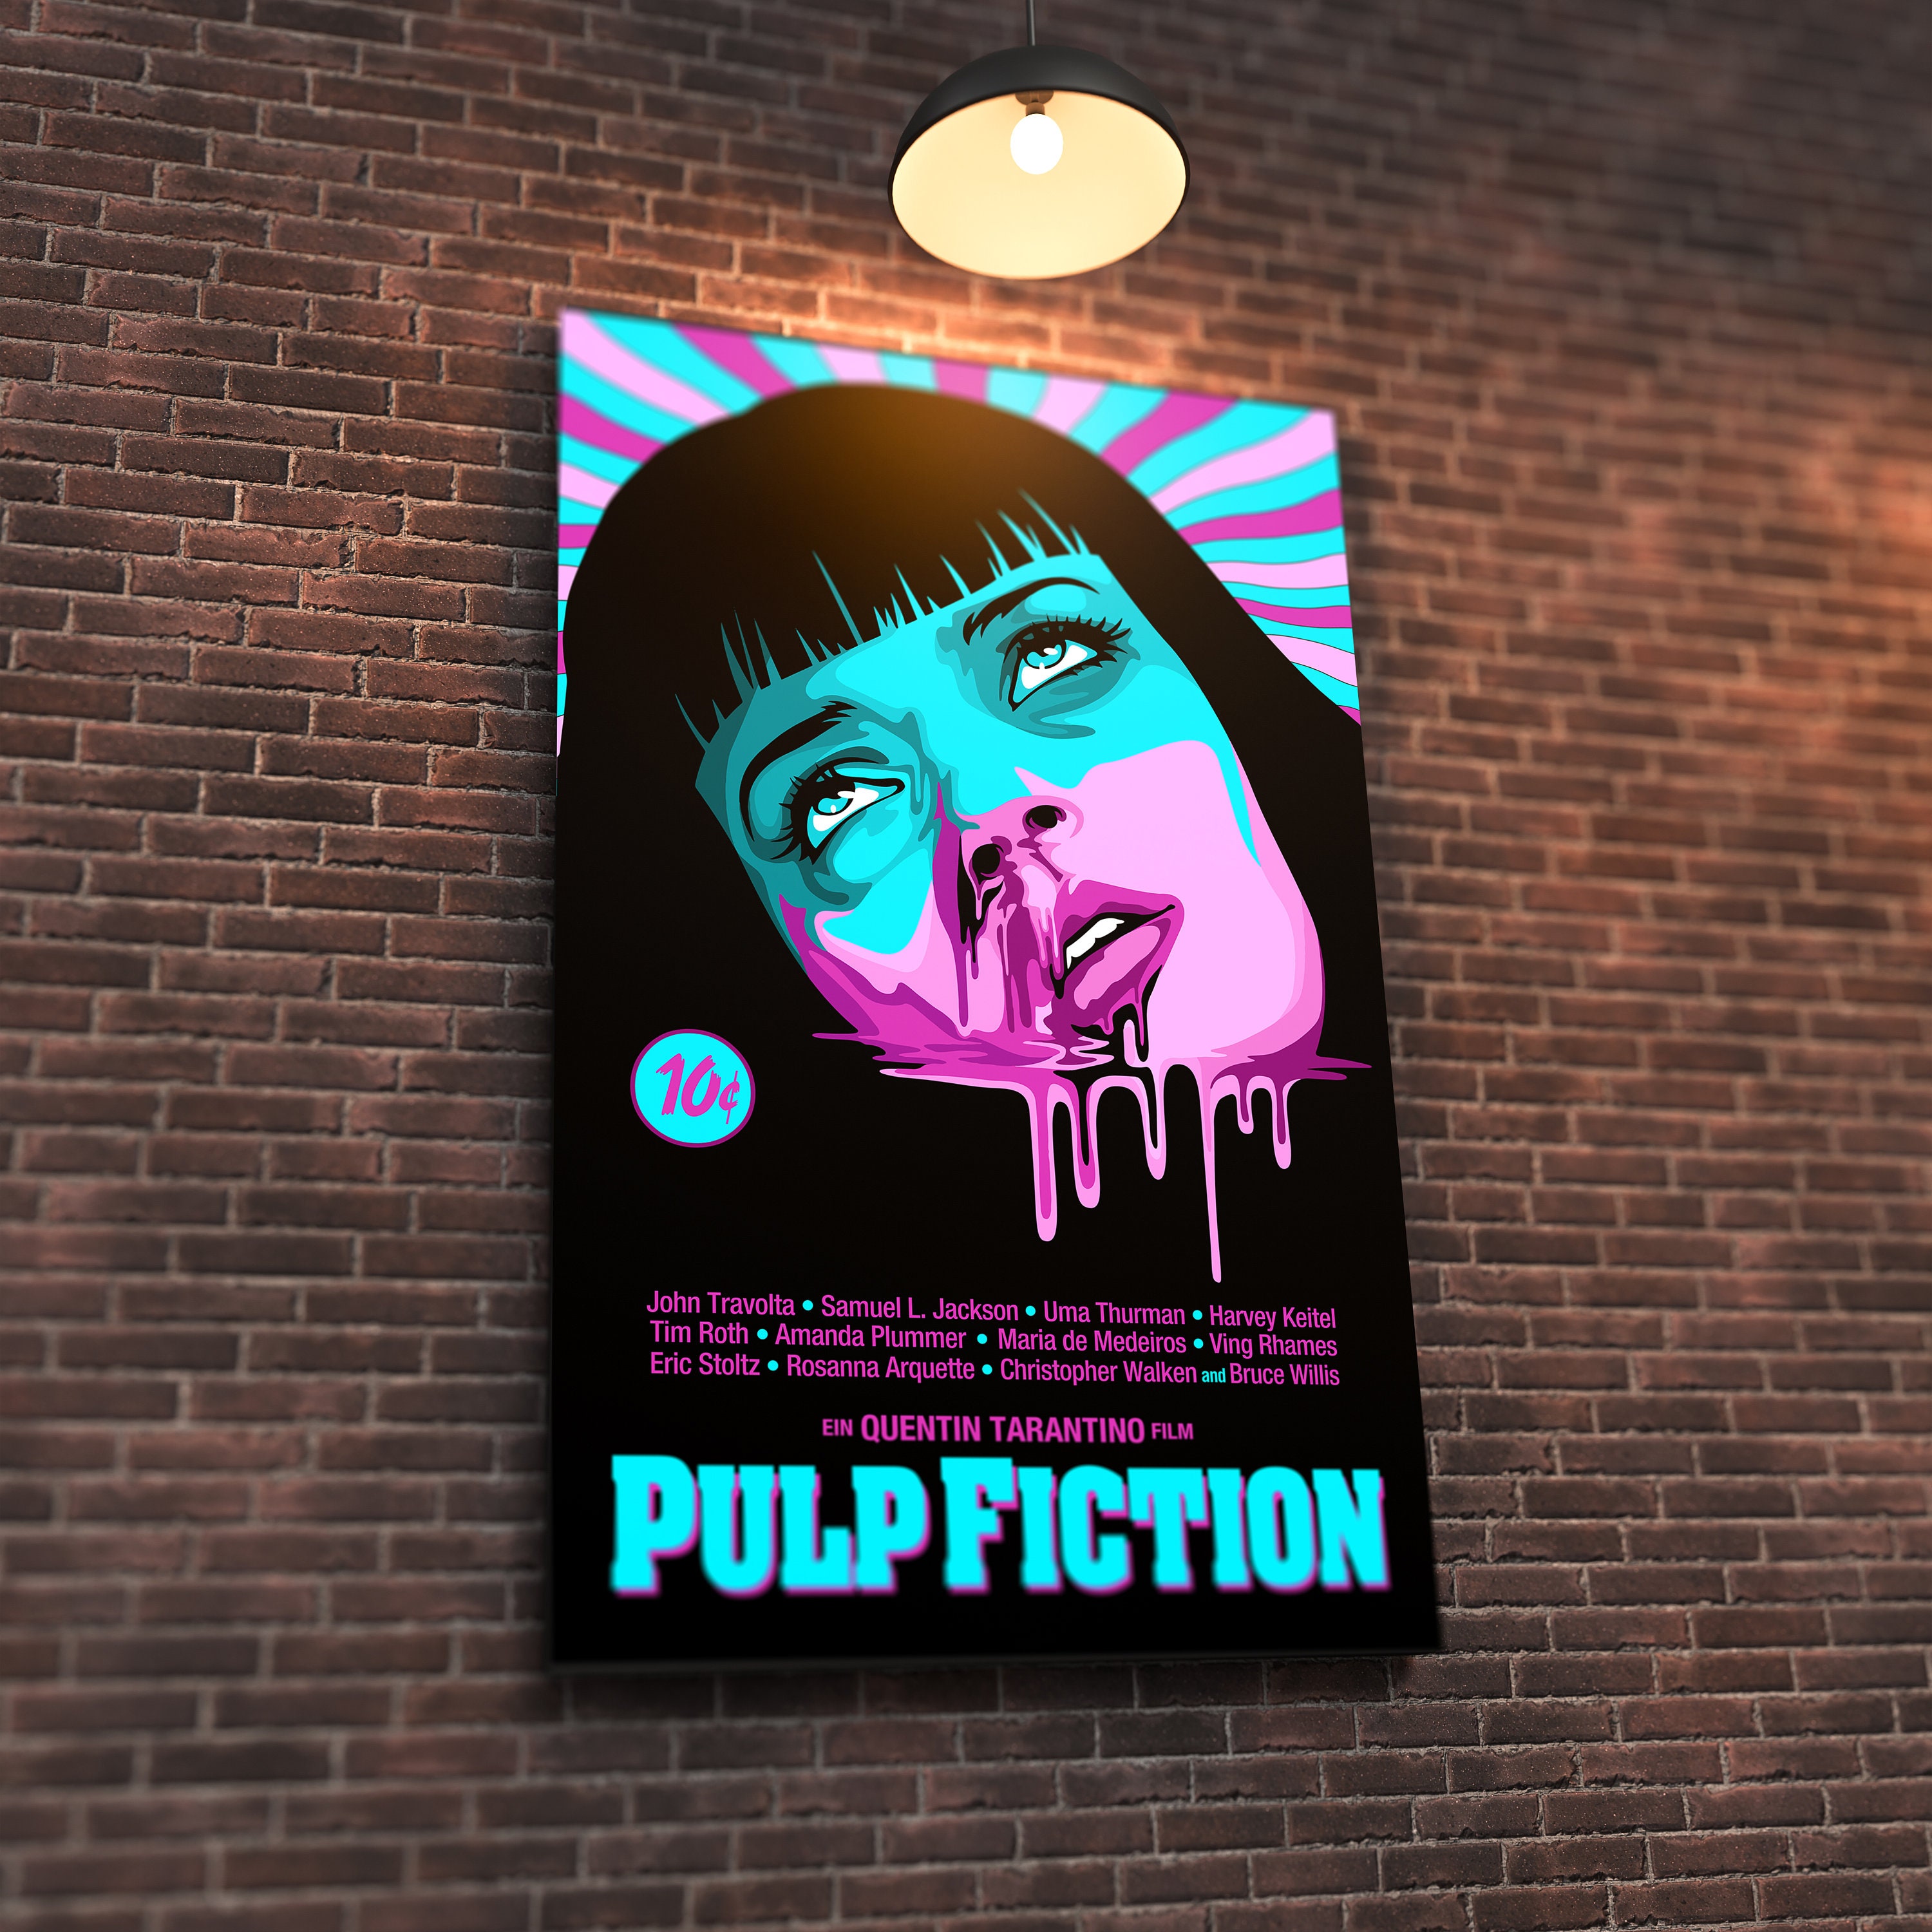 Pulp Fiction': Quentin Tarantino's overdose scene still jolts at 25